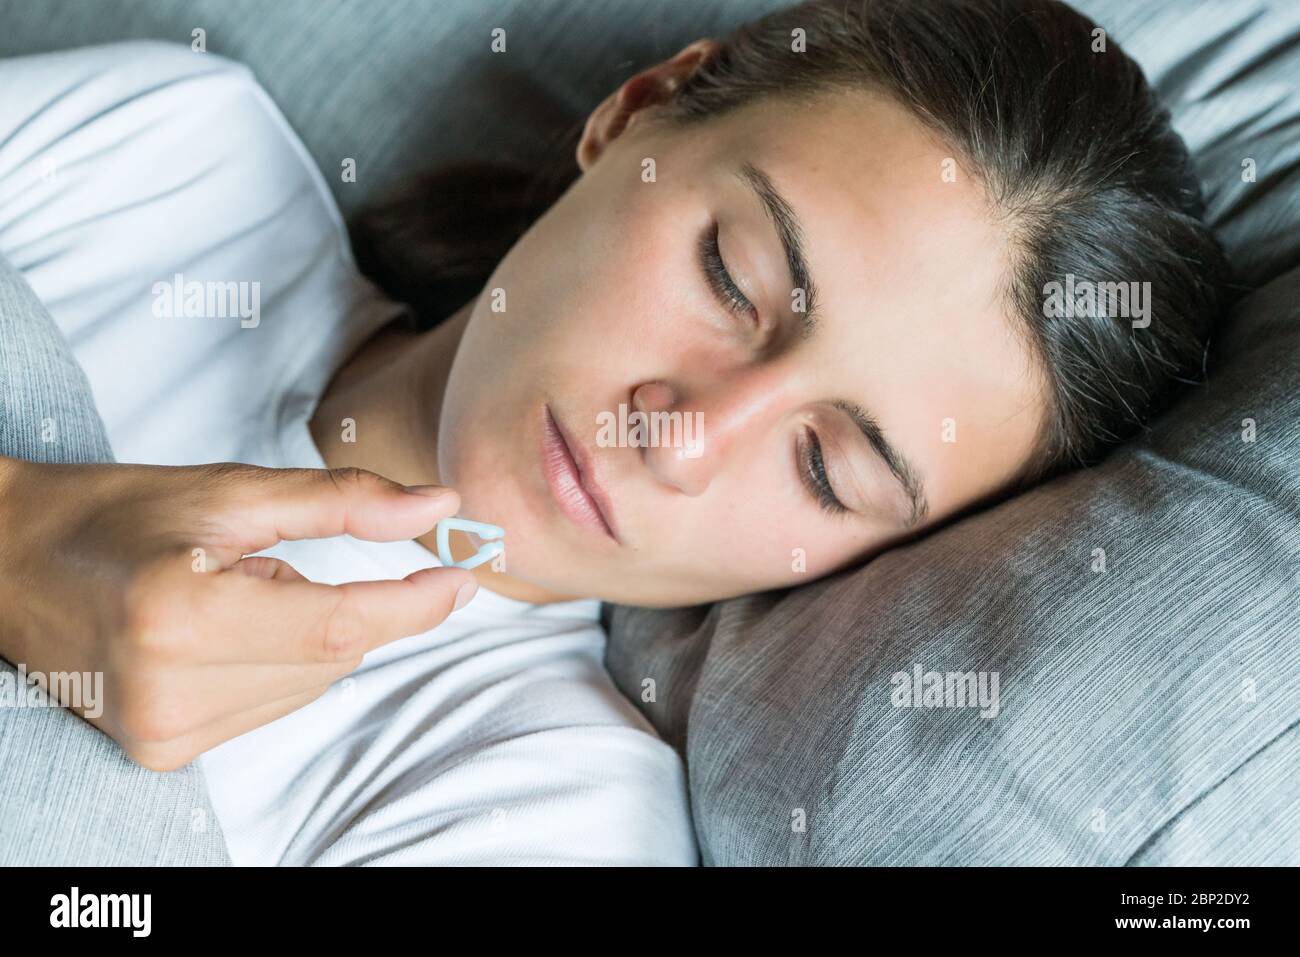 Woman using a nasal clip, anti snoring device. Stock Photo